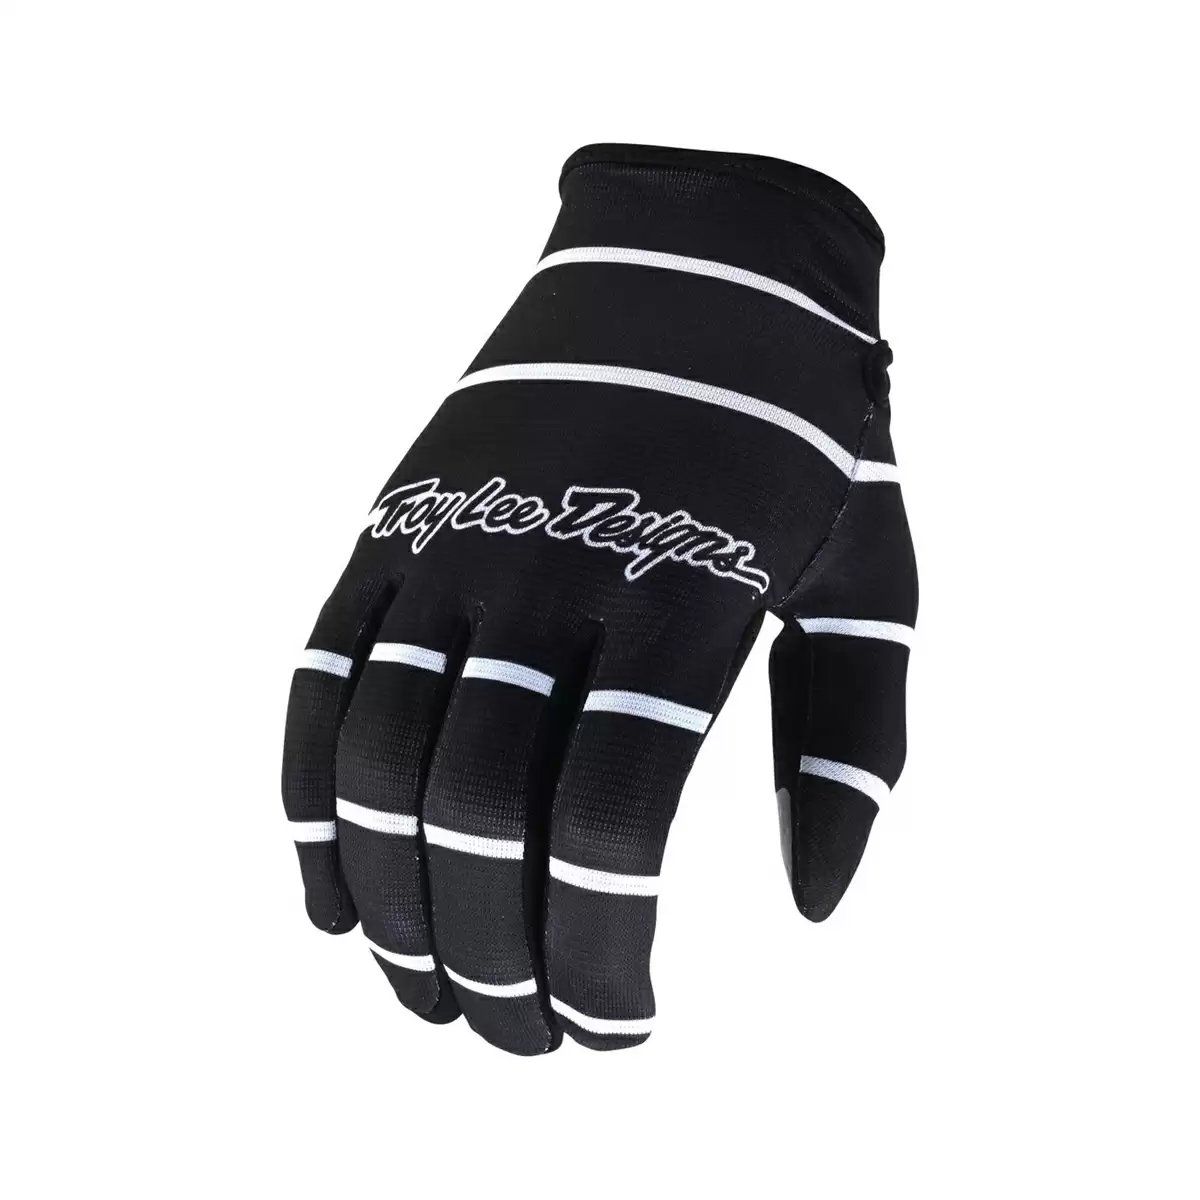 Gloves Flowline Stripe Black Size L - image